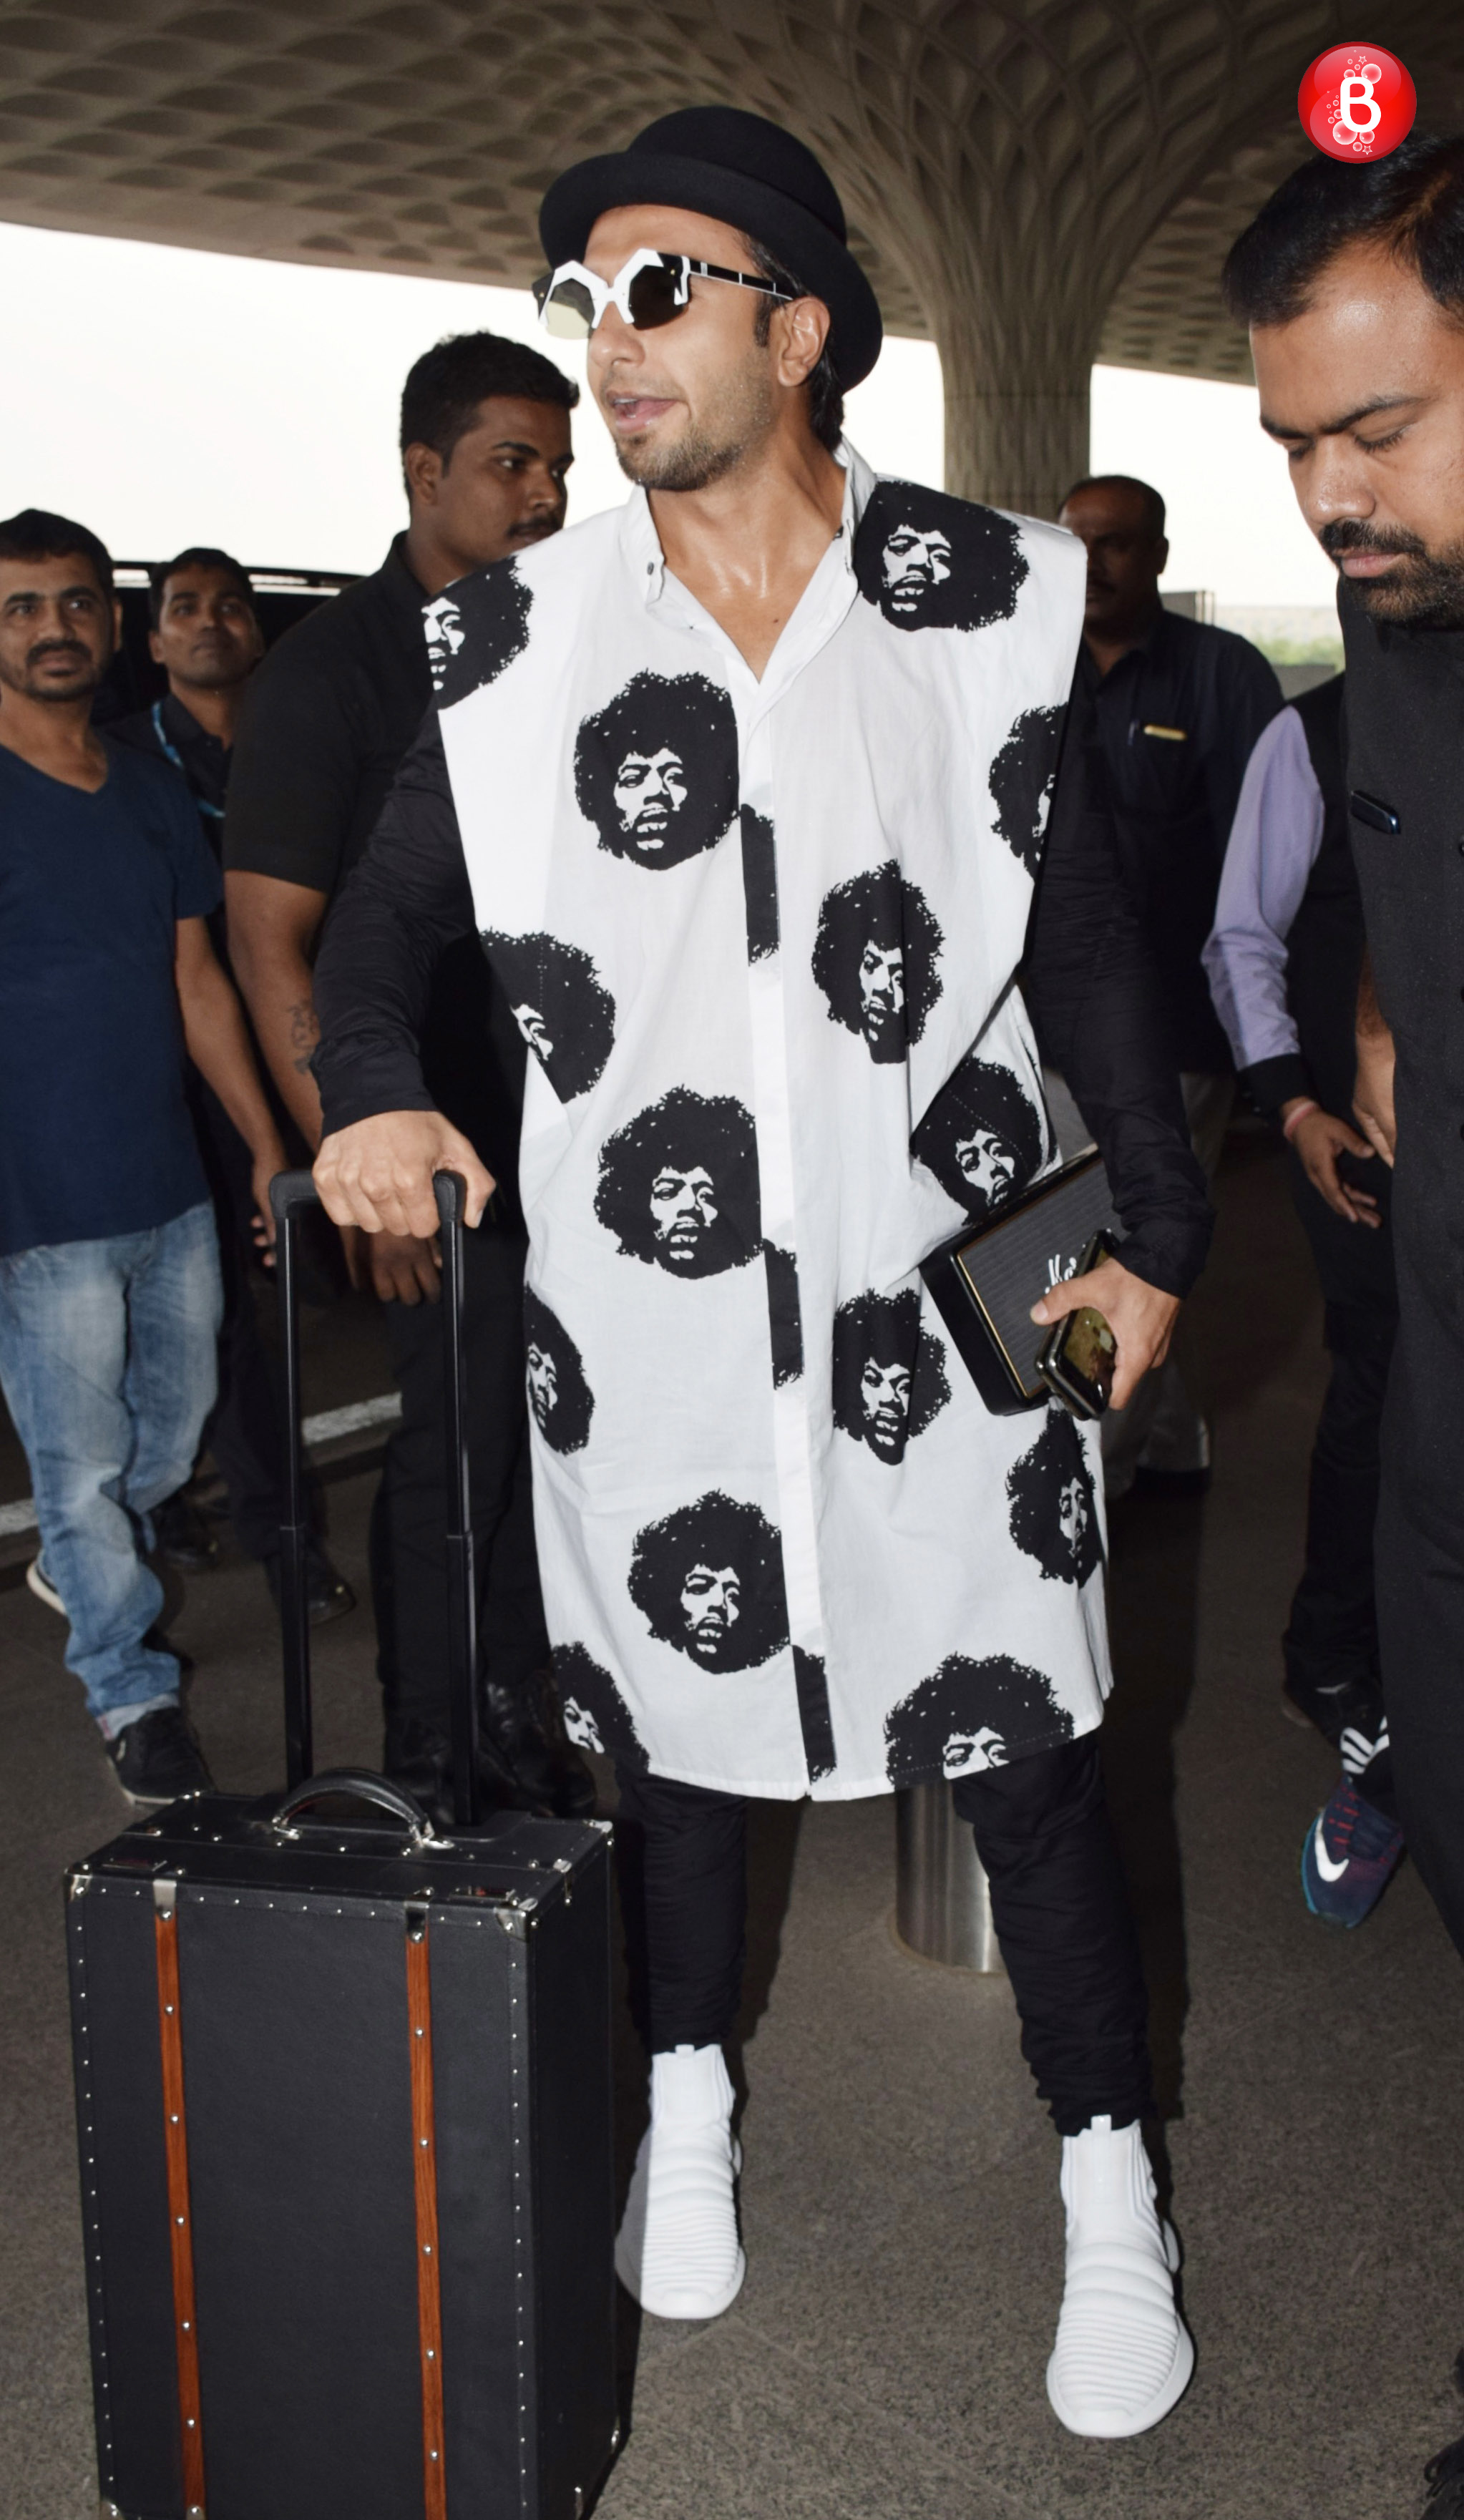 Ranveer Singh proves again that he has mastered the airport look